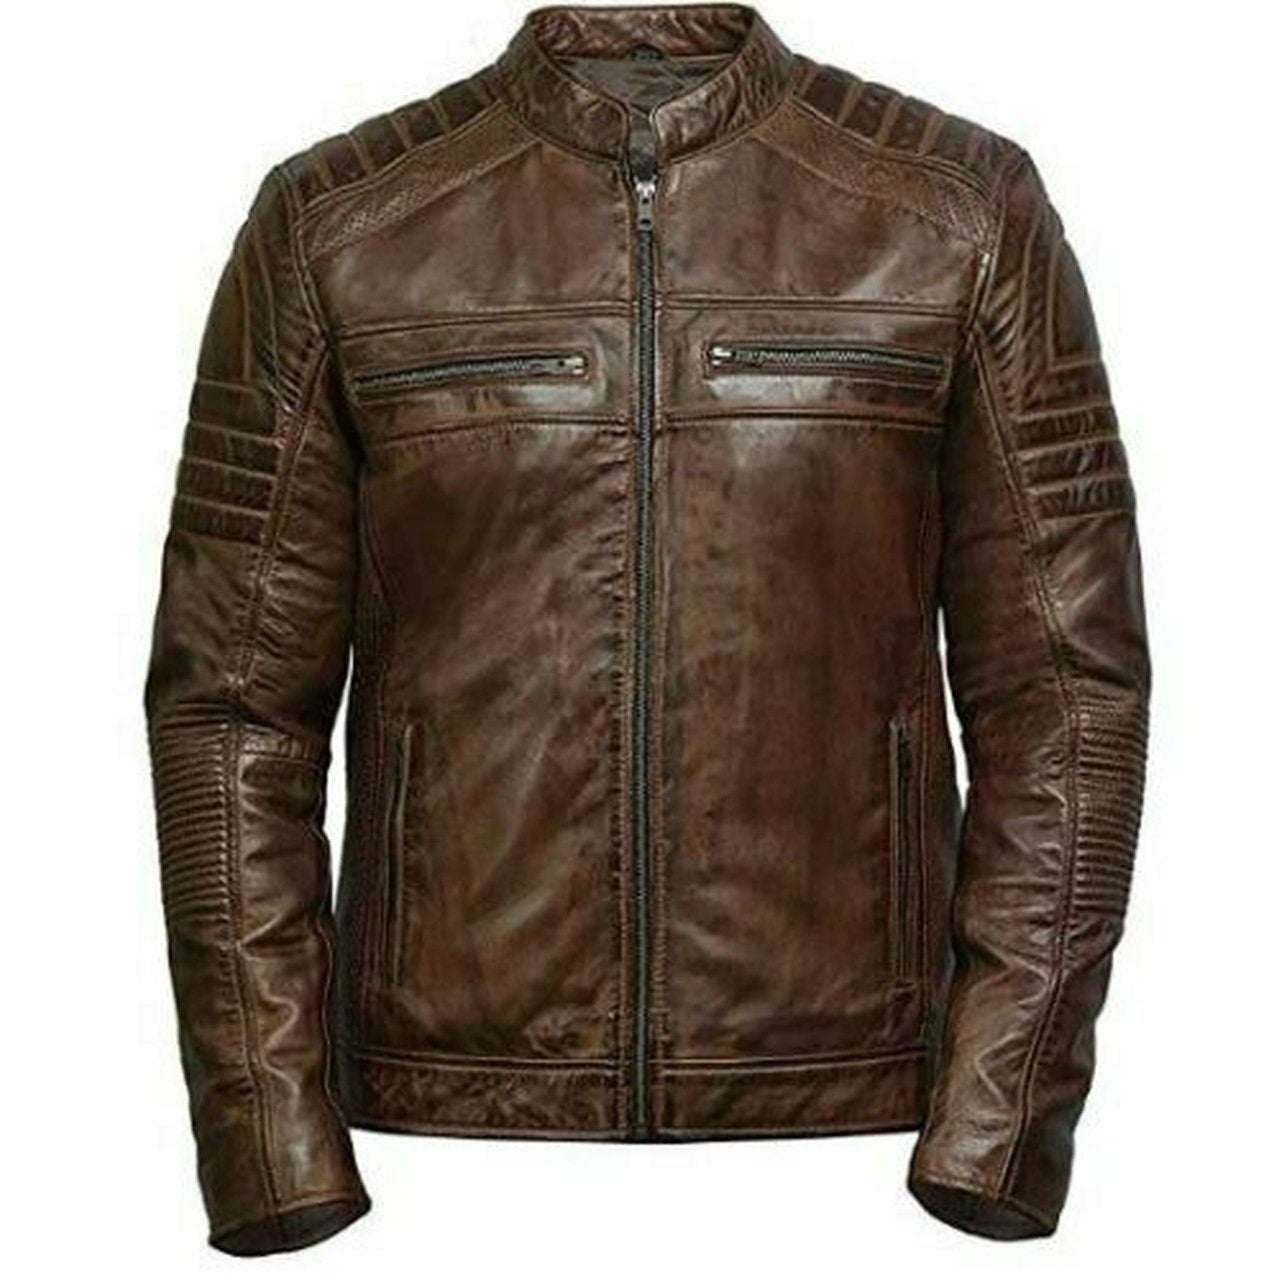 Vintage Motorcycle Biker Distressed Brown Cafe Racer Quilted Leather Jacket - Leather Jacket